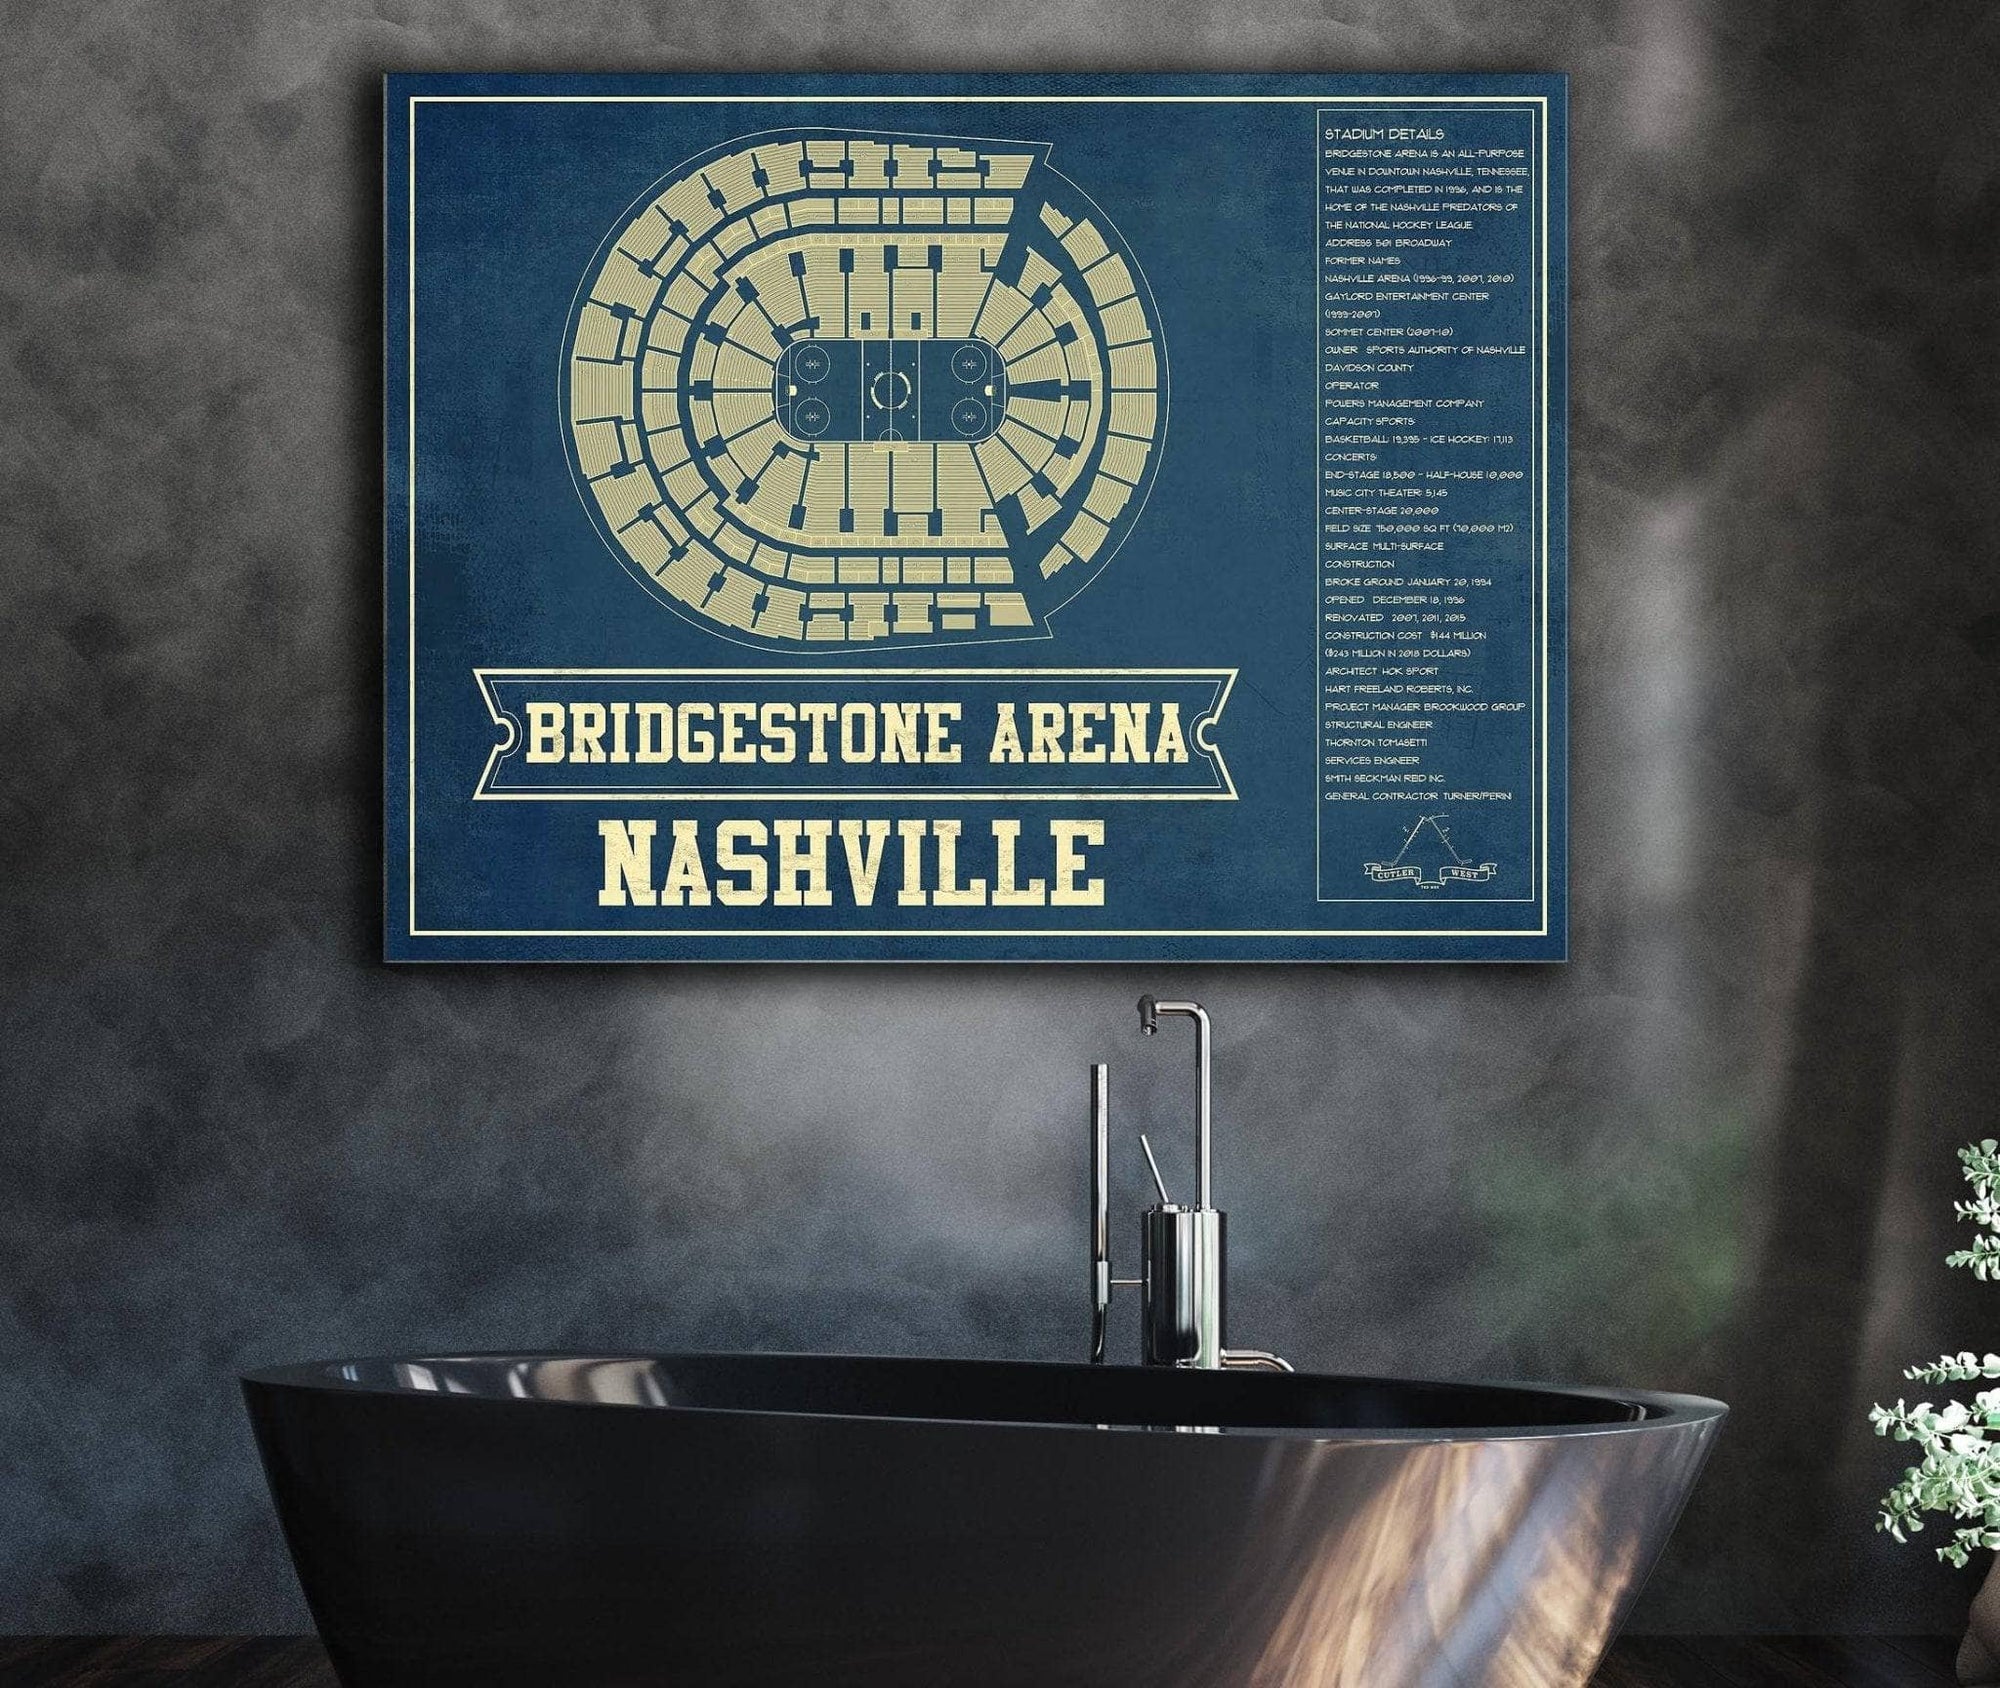 Cutler West Nashville Predators Bridgestone Arena Seating Chart - Vintage Hockey Print